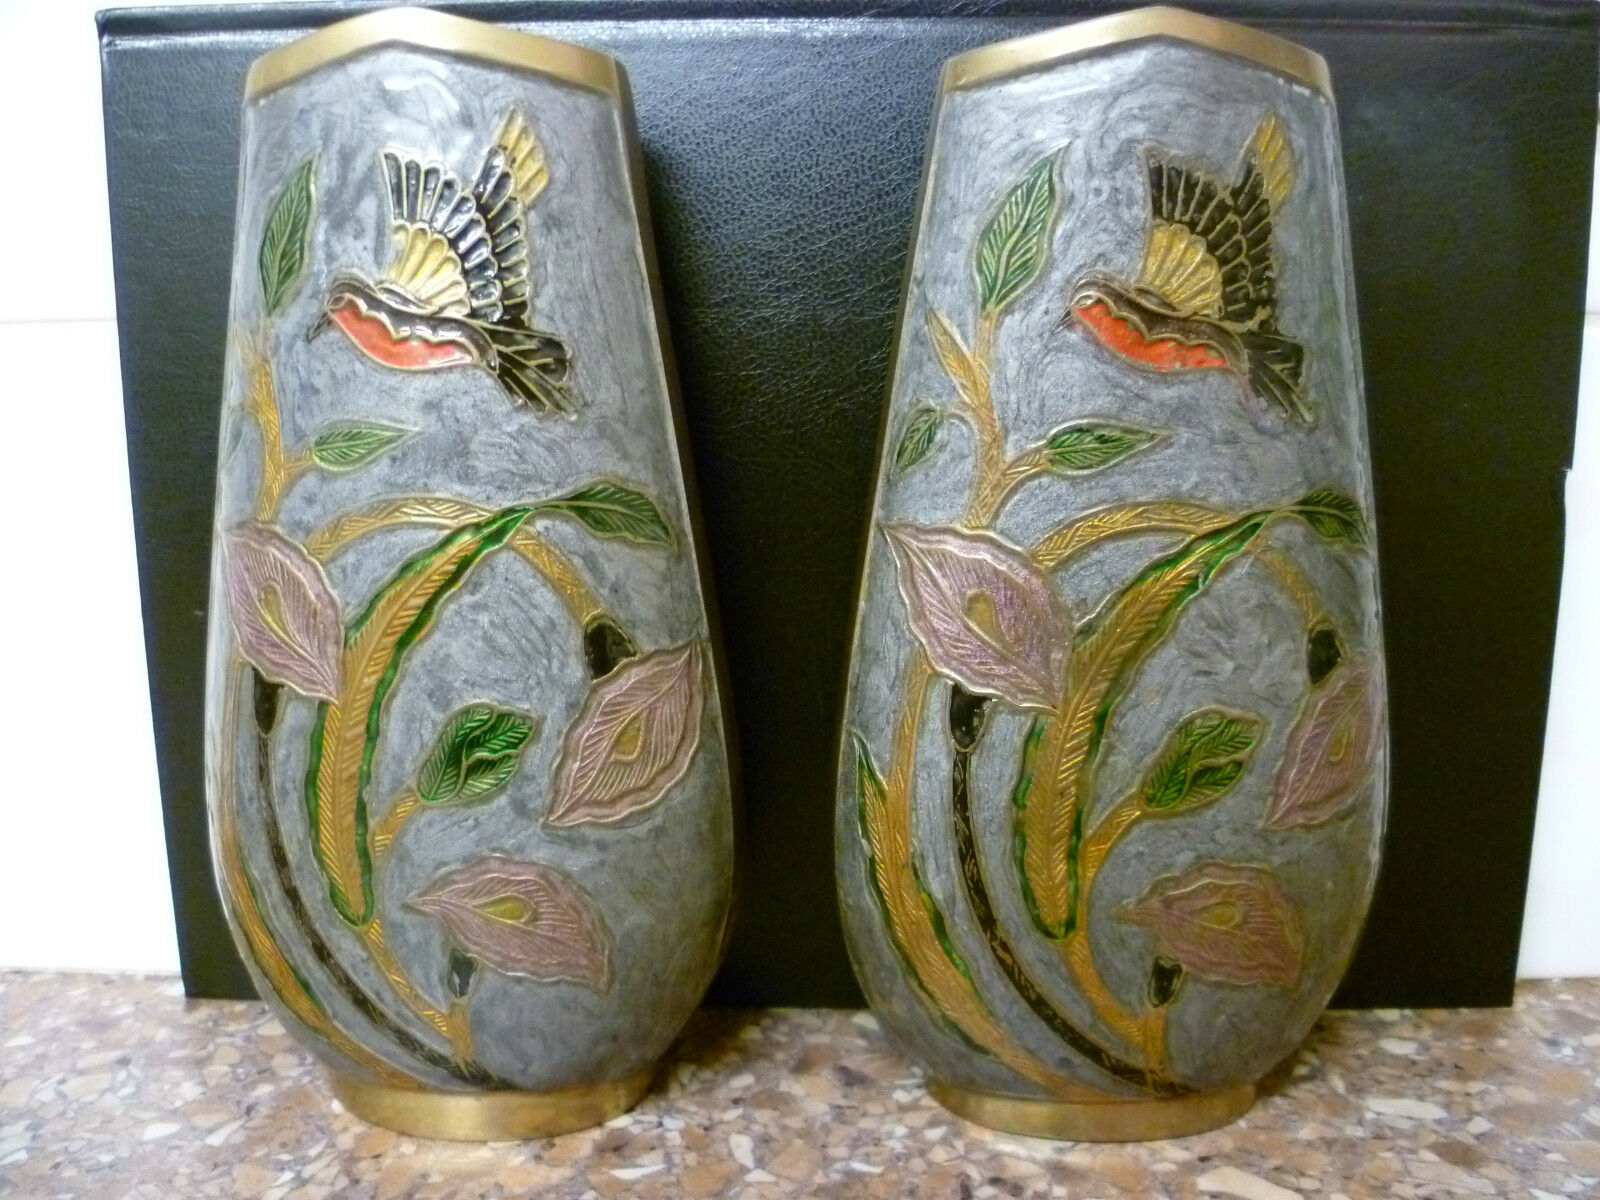 Indian vase 1.jpg